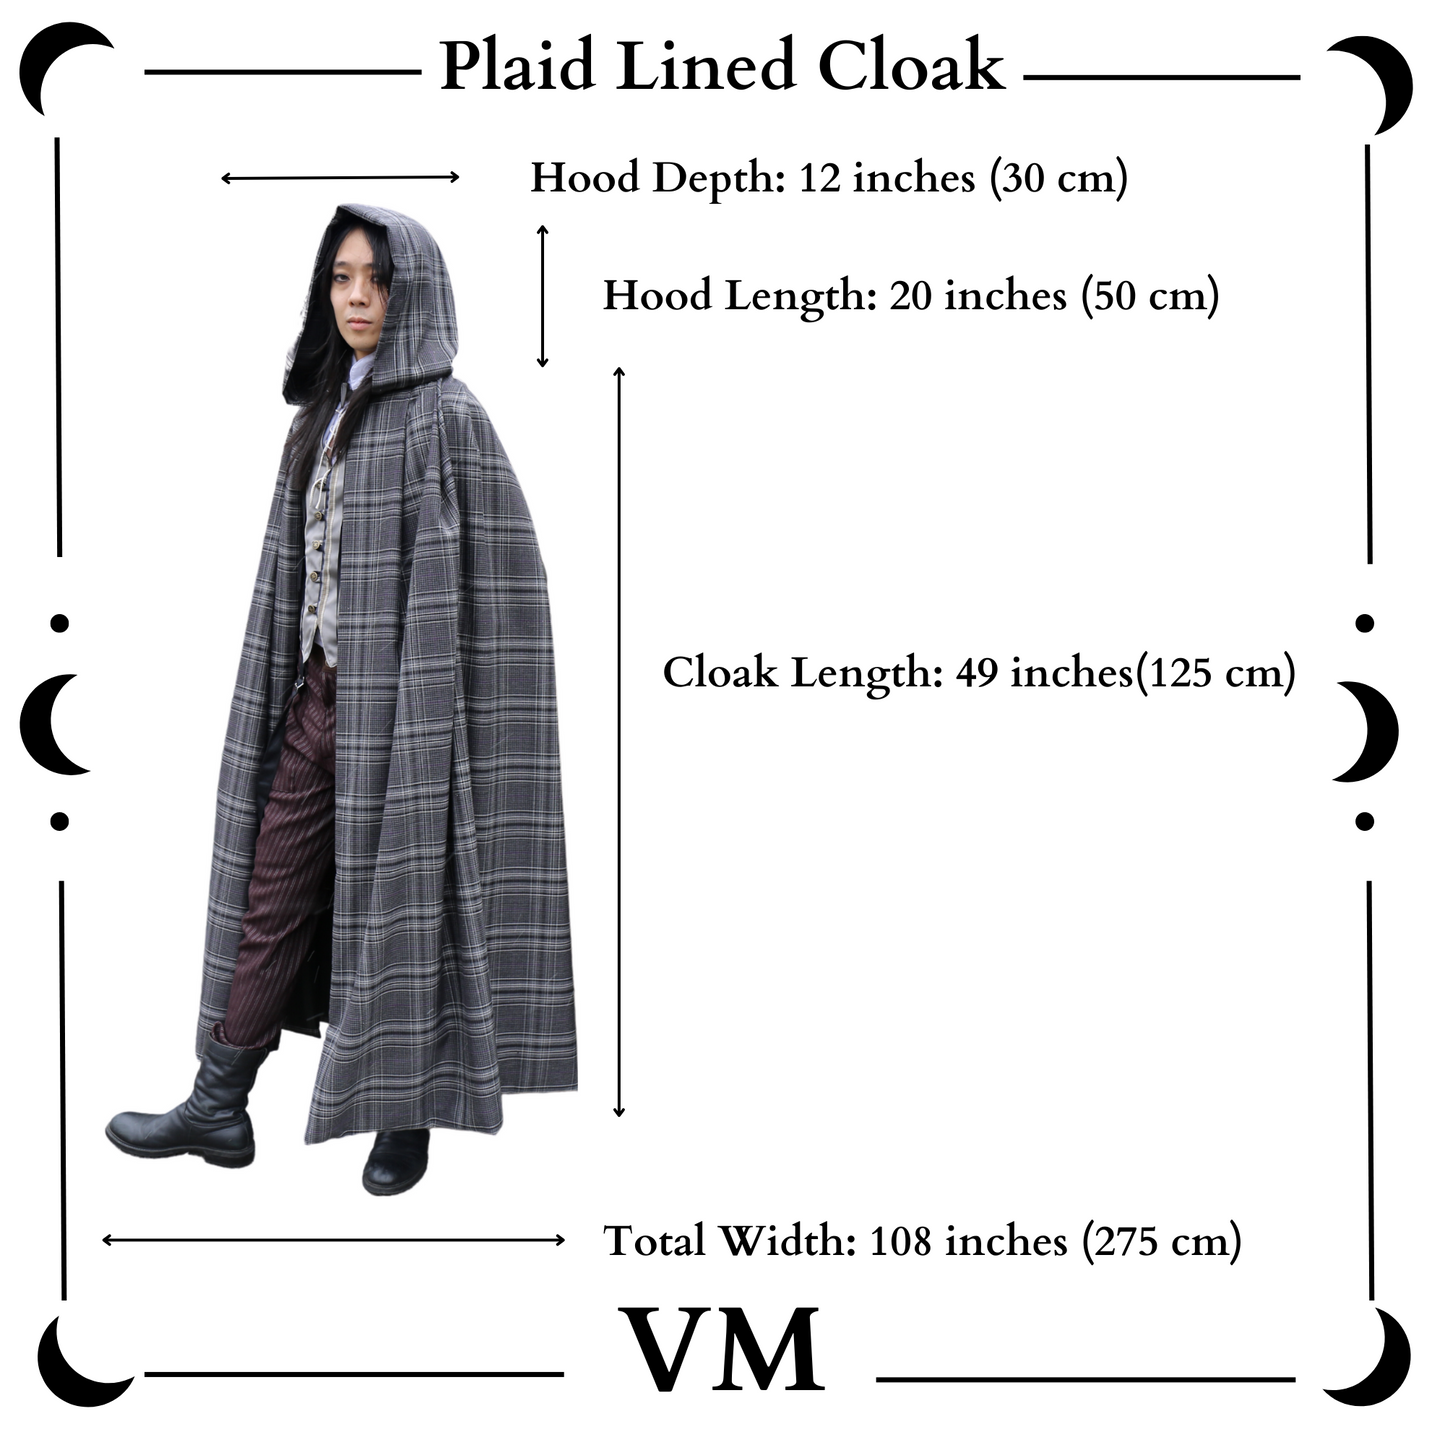 The VM Plaid Lined Cloak